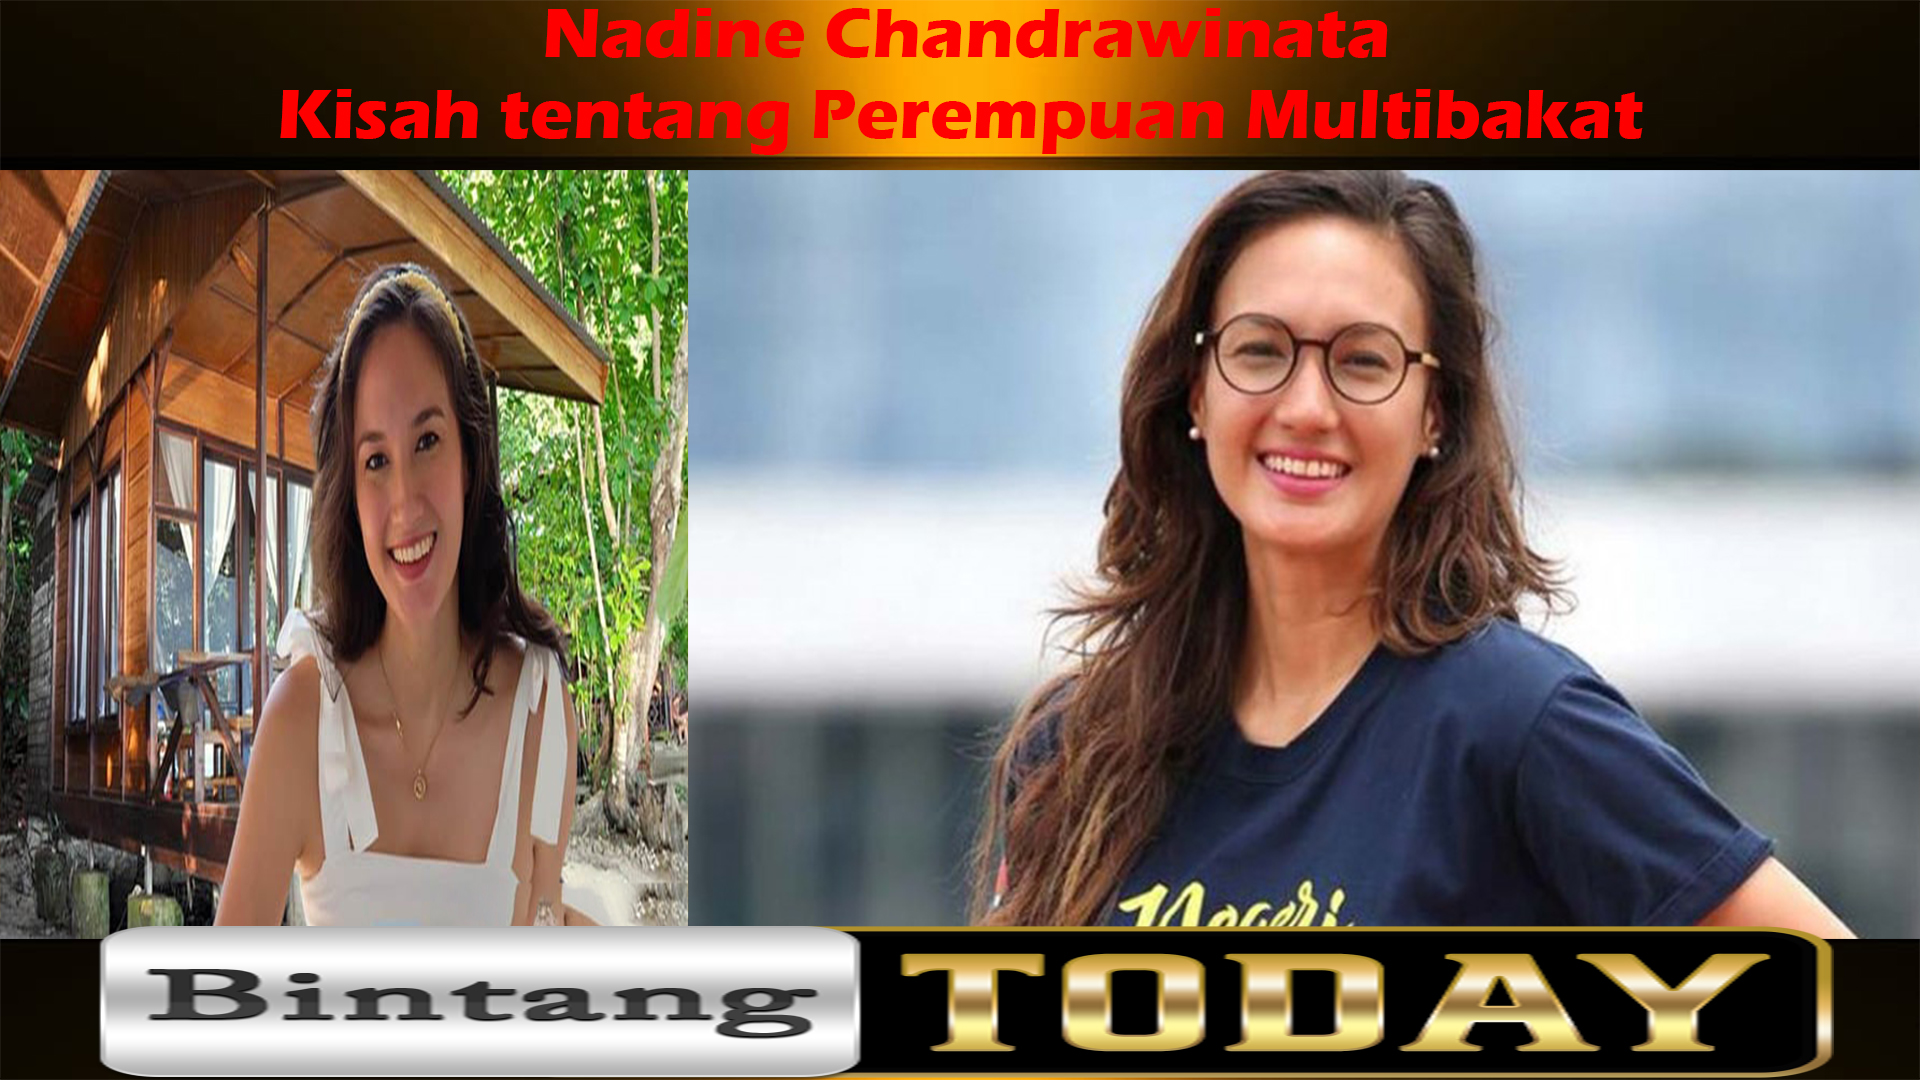 Nadine Chandrawinata: Kisah tentang Perempuan Multibakat